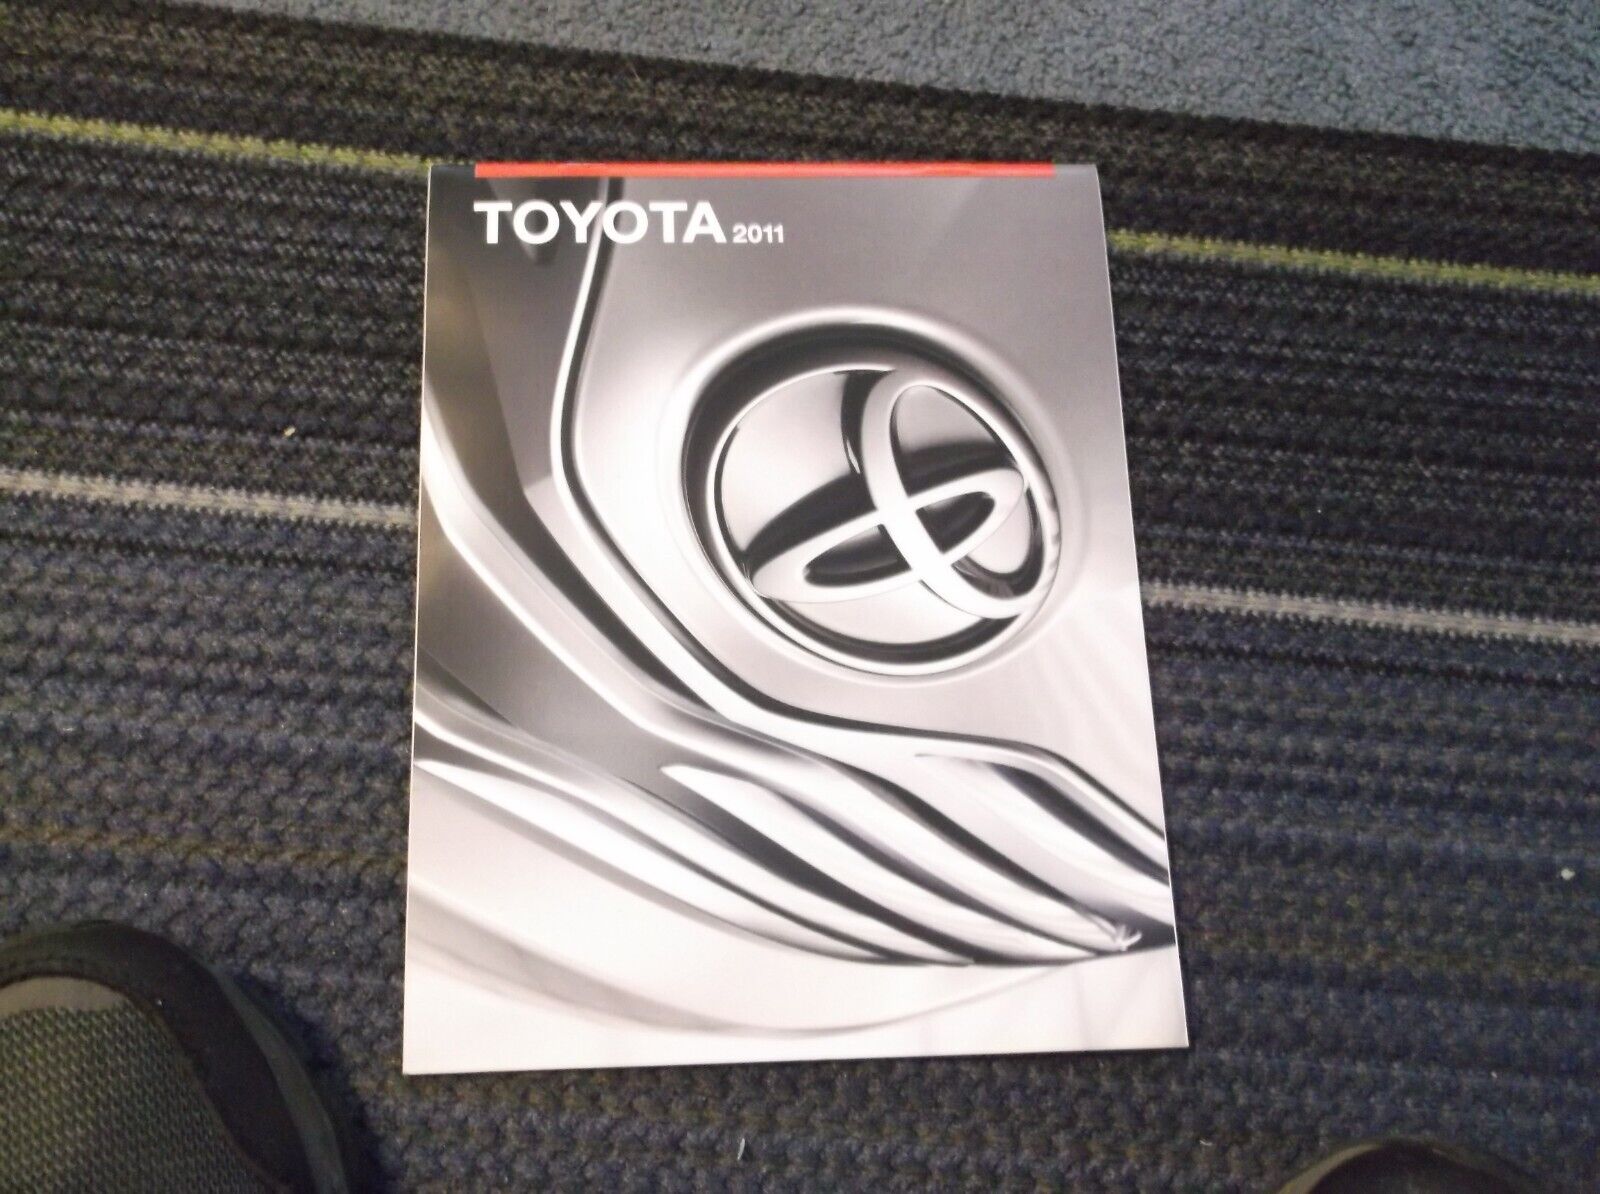 2011 Toyota Brochure has all models & color chart